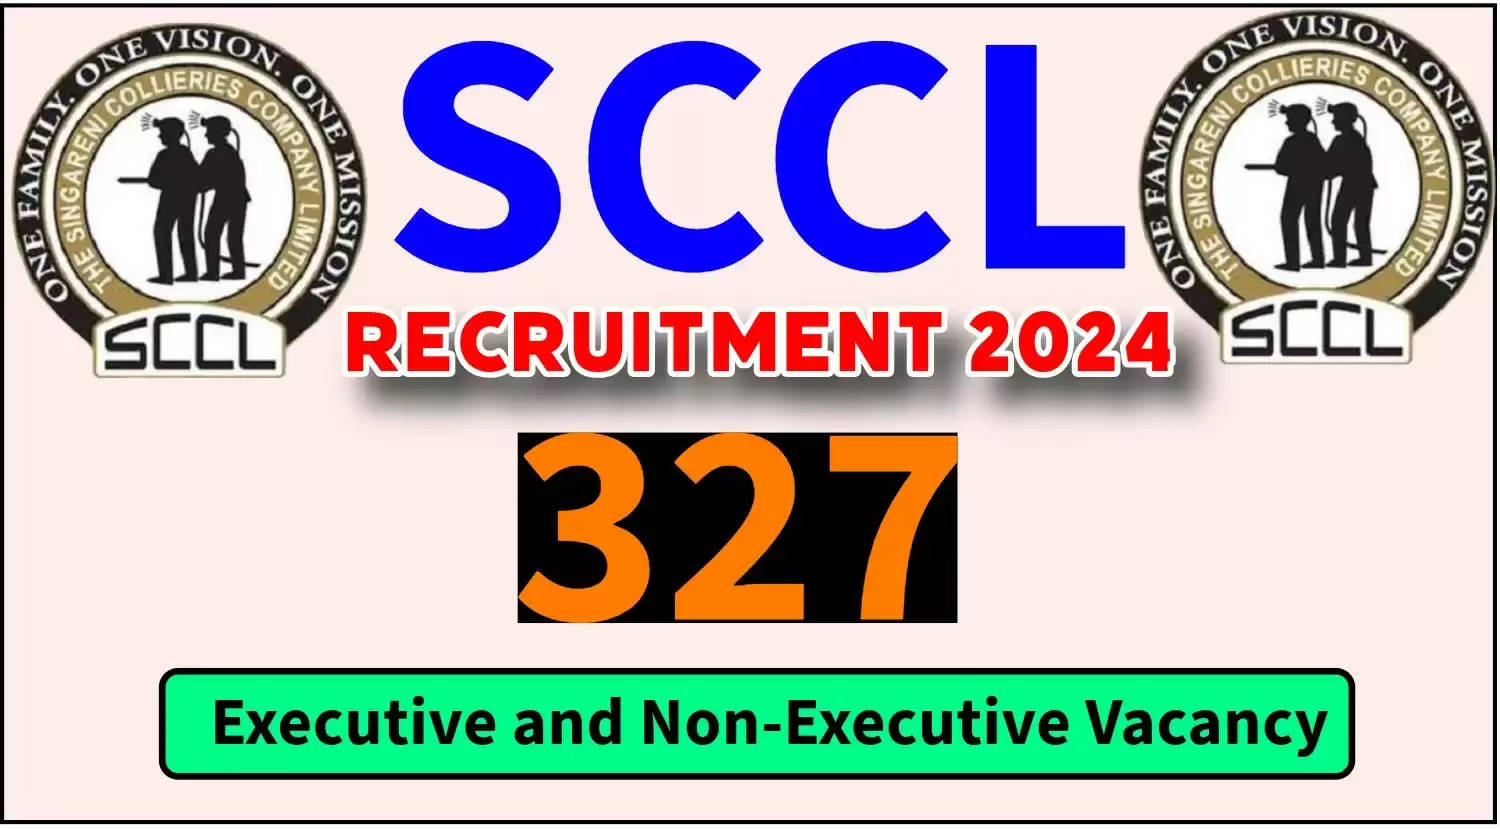 Online Applications Open: SCCL Executive & Non-Executive Recruitment 2024 for 327 Vacancies